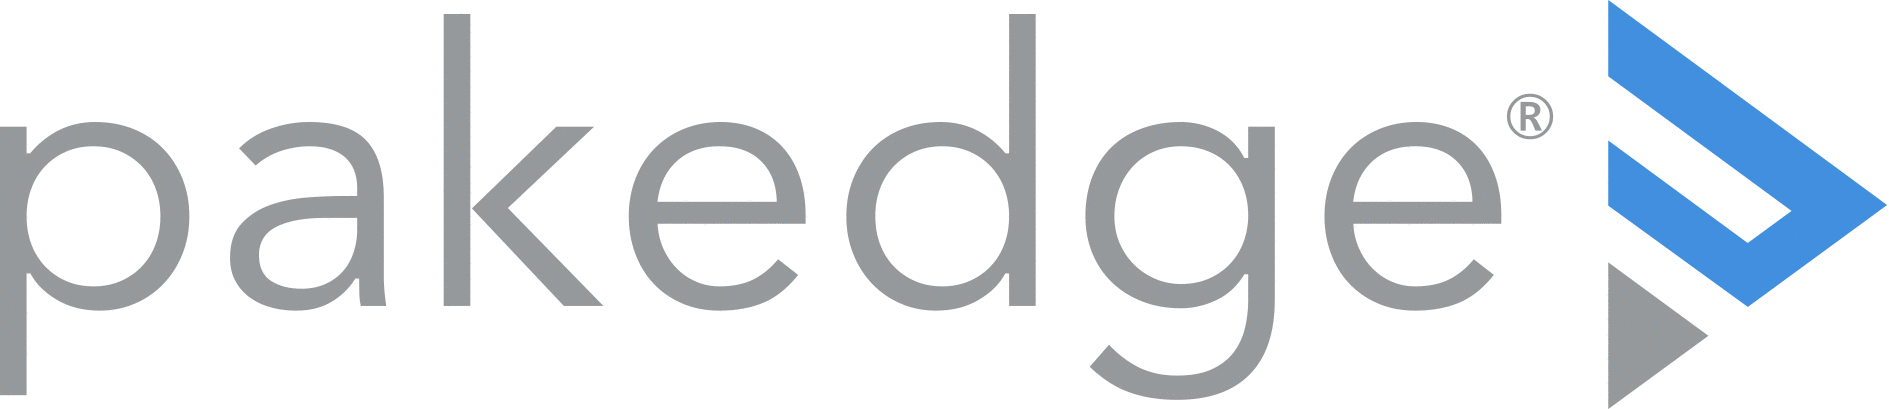 pakedge logo